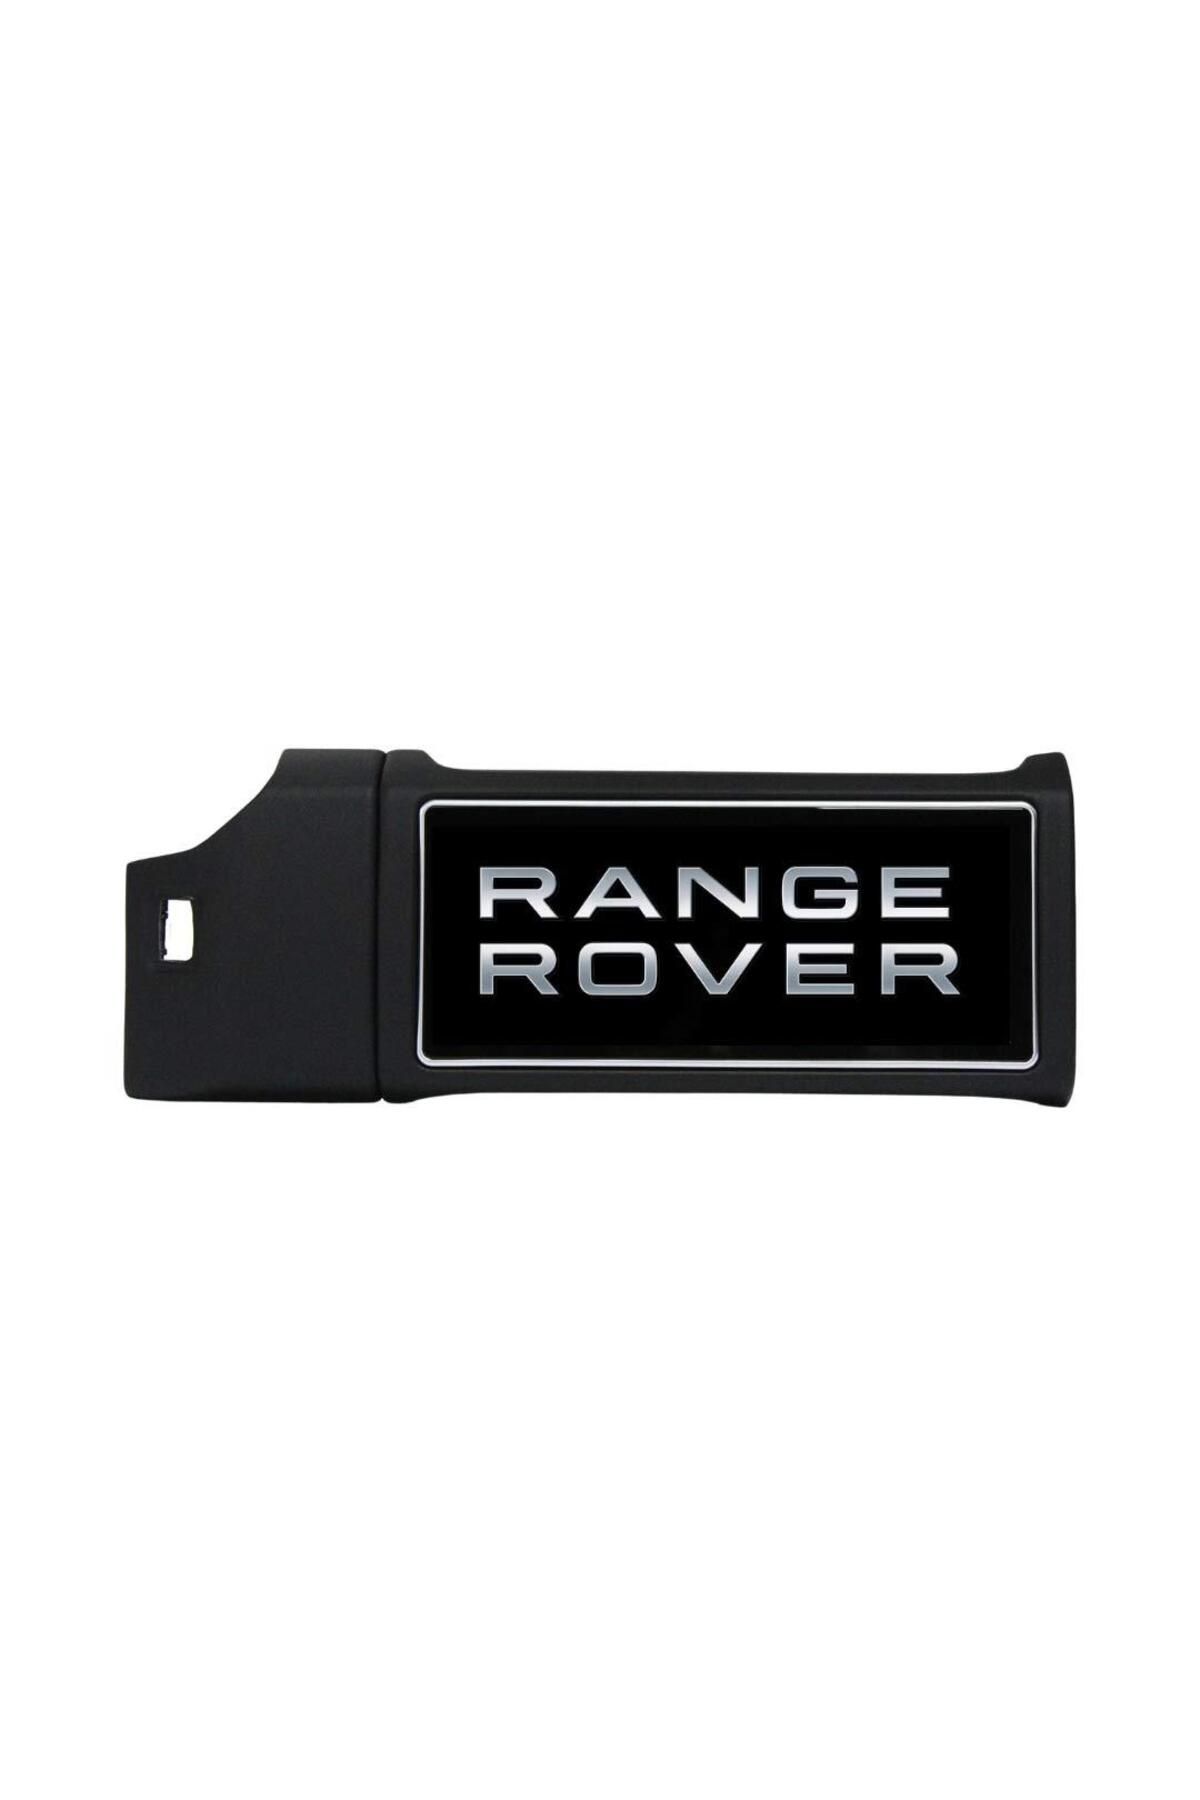 MYWAYY Oto Multimedya Land Rover Range Rover Vogue Black 2013 - 2017 4 GB RAM 64 GB HDD 8 Çekir